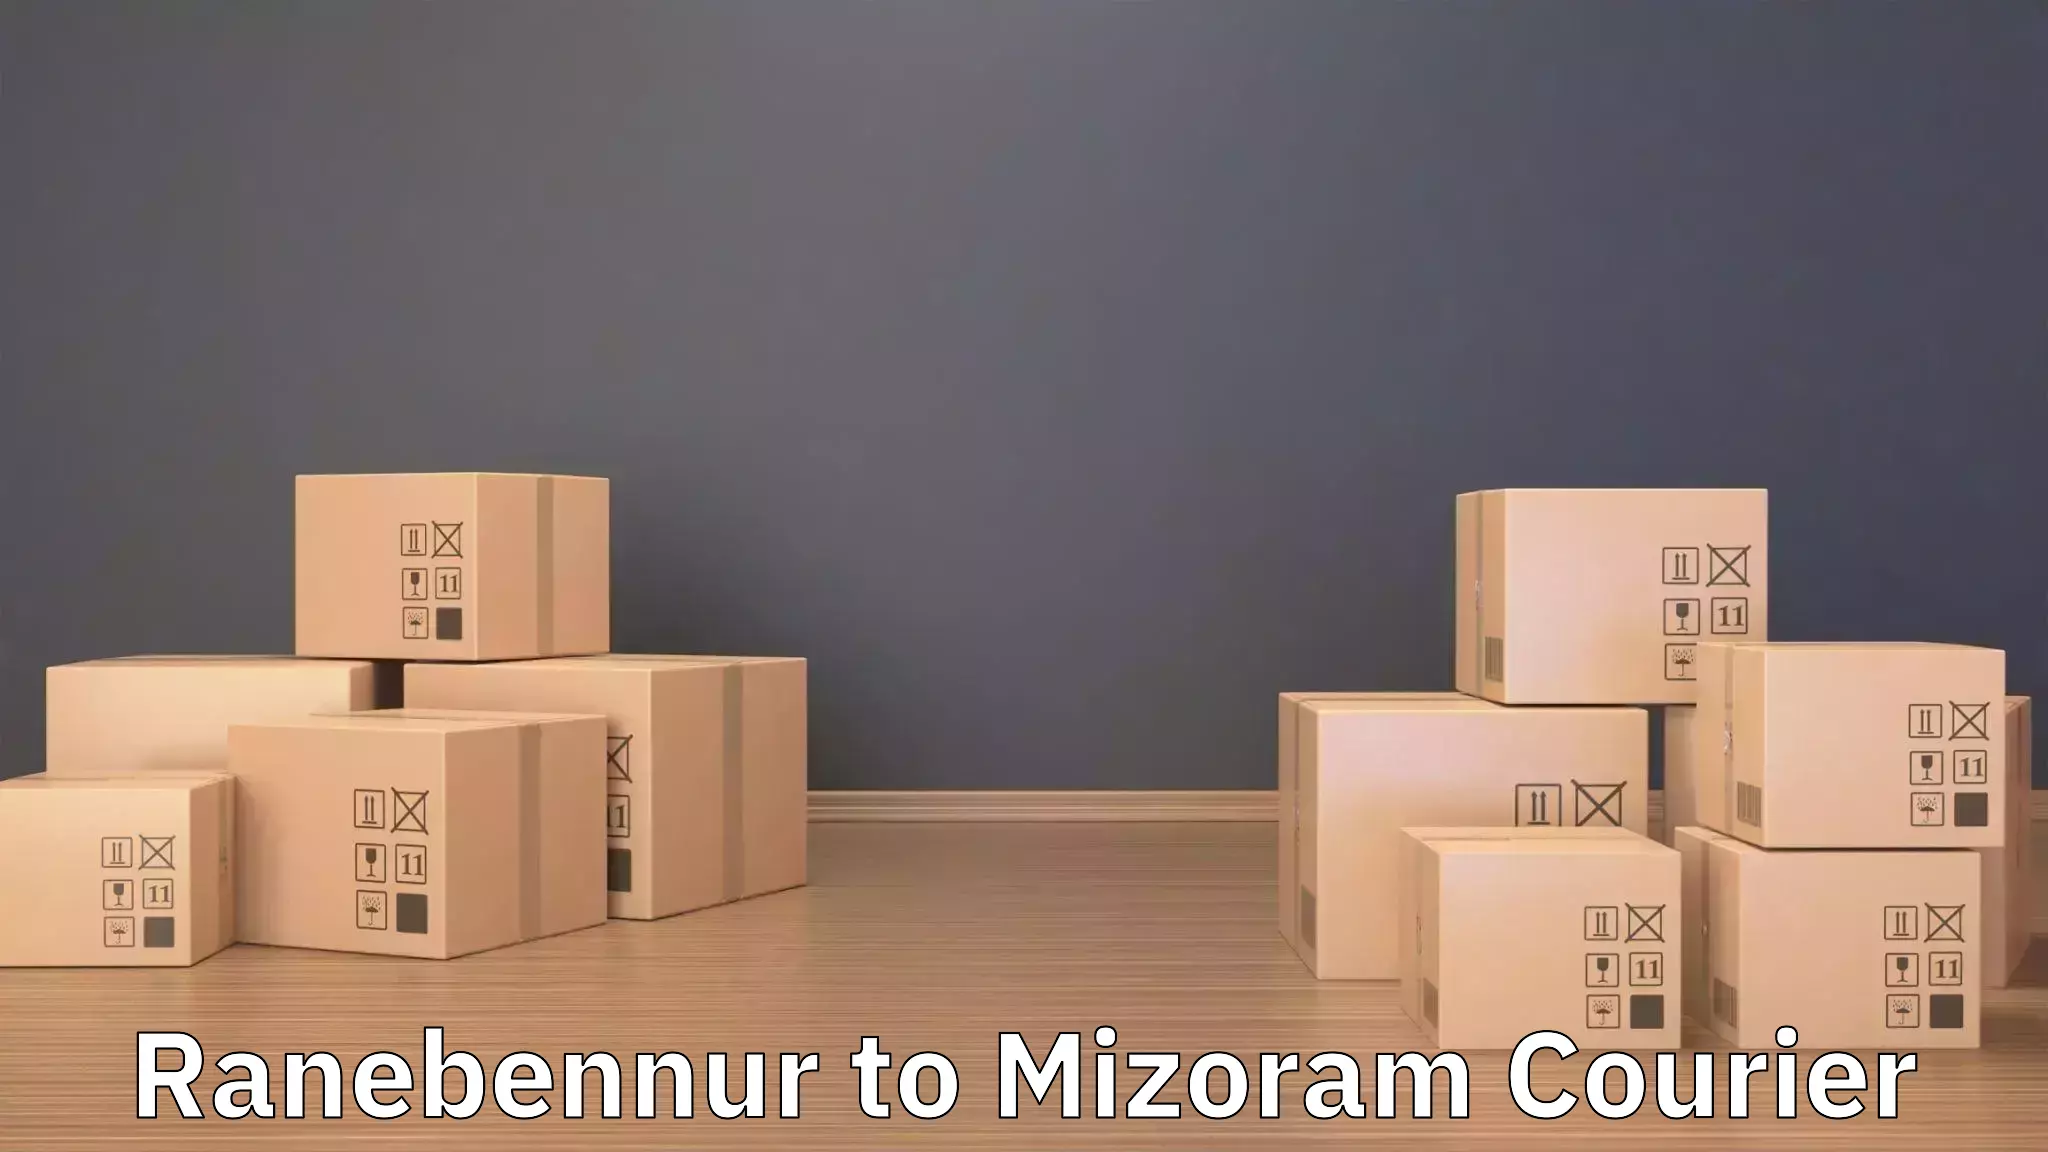 Professional moving company Ranebennur to Mizoram